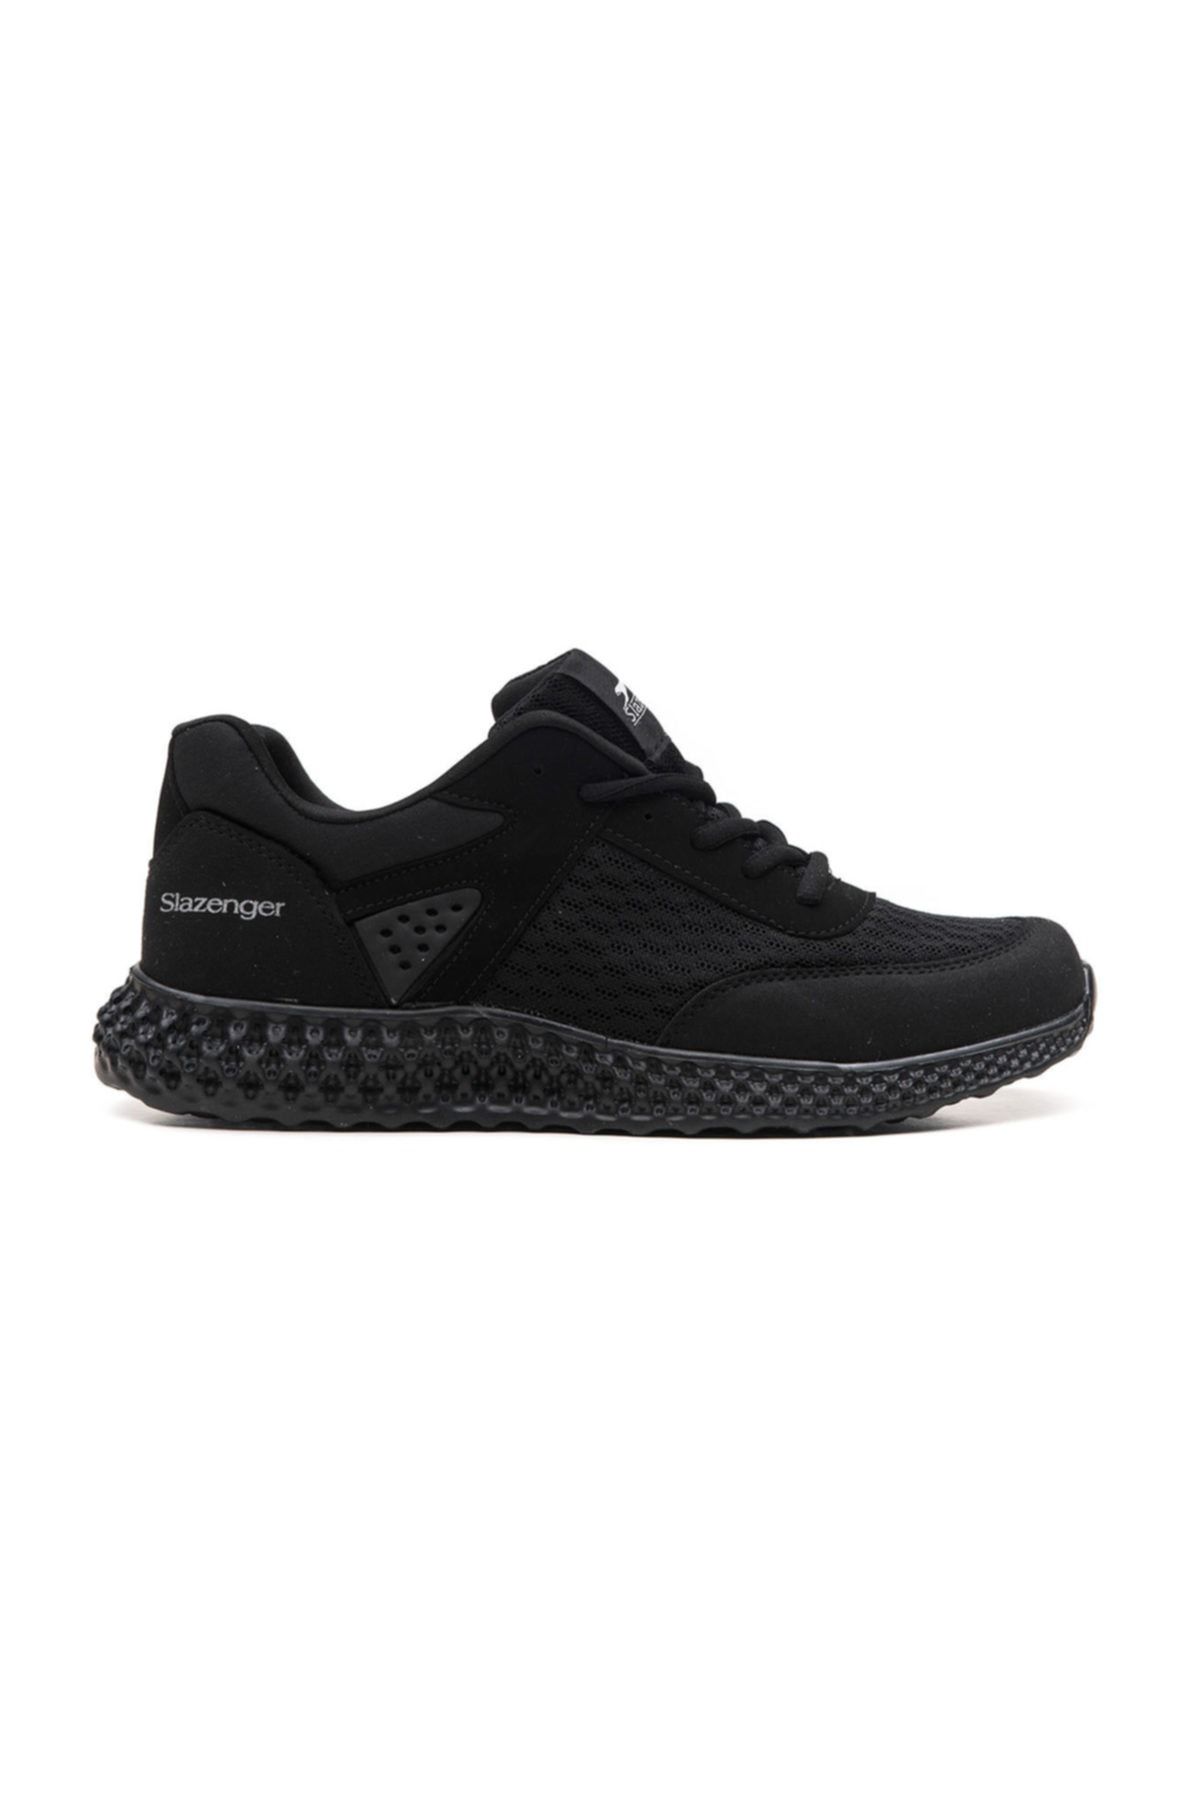 Slazenger Admıre Sneaker Erkek Ayakkabı Siyah / Siyah